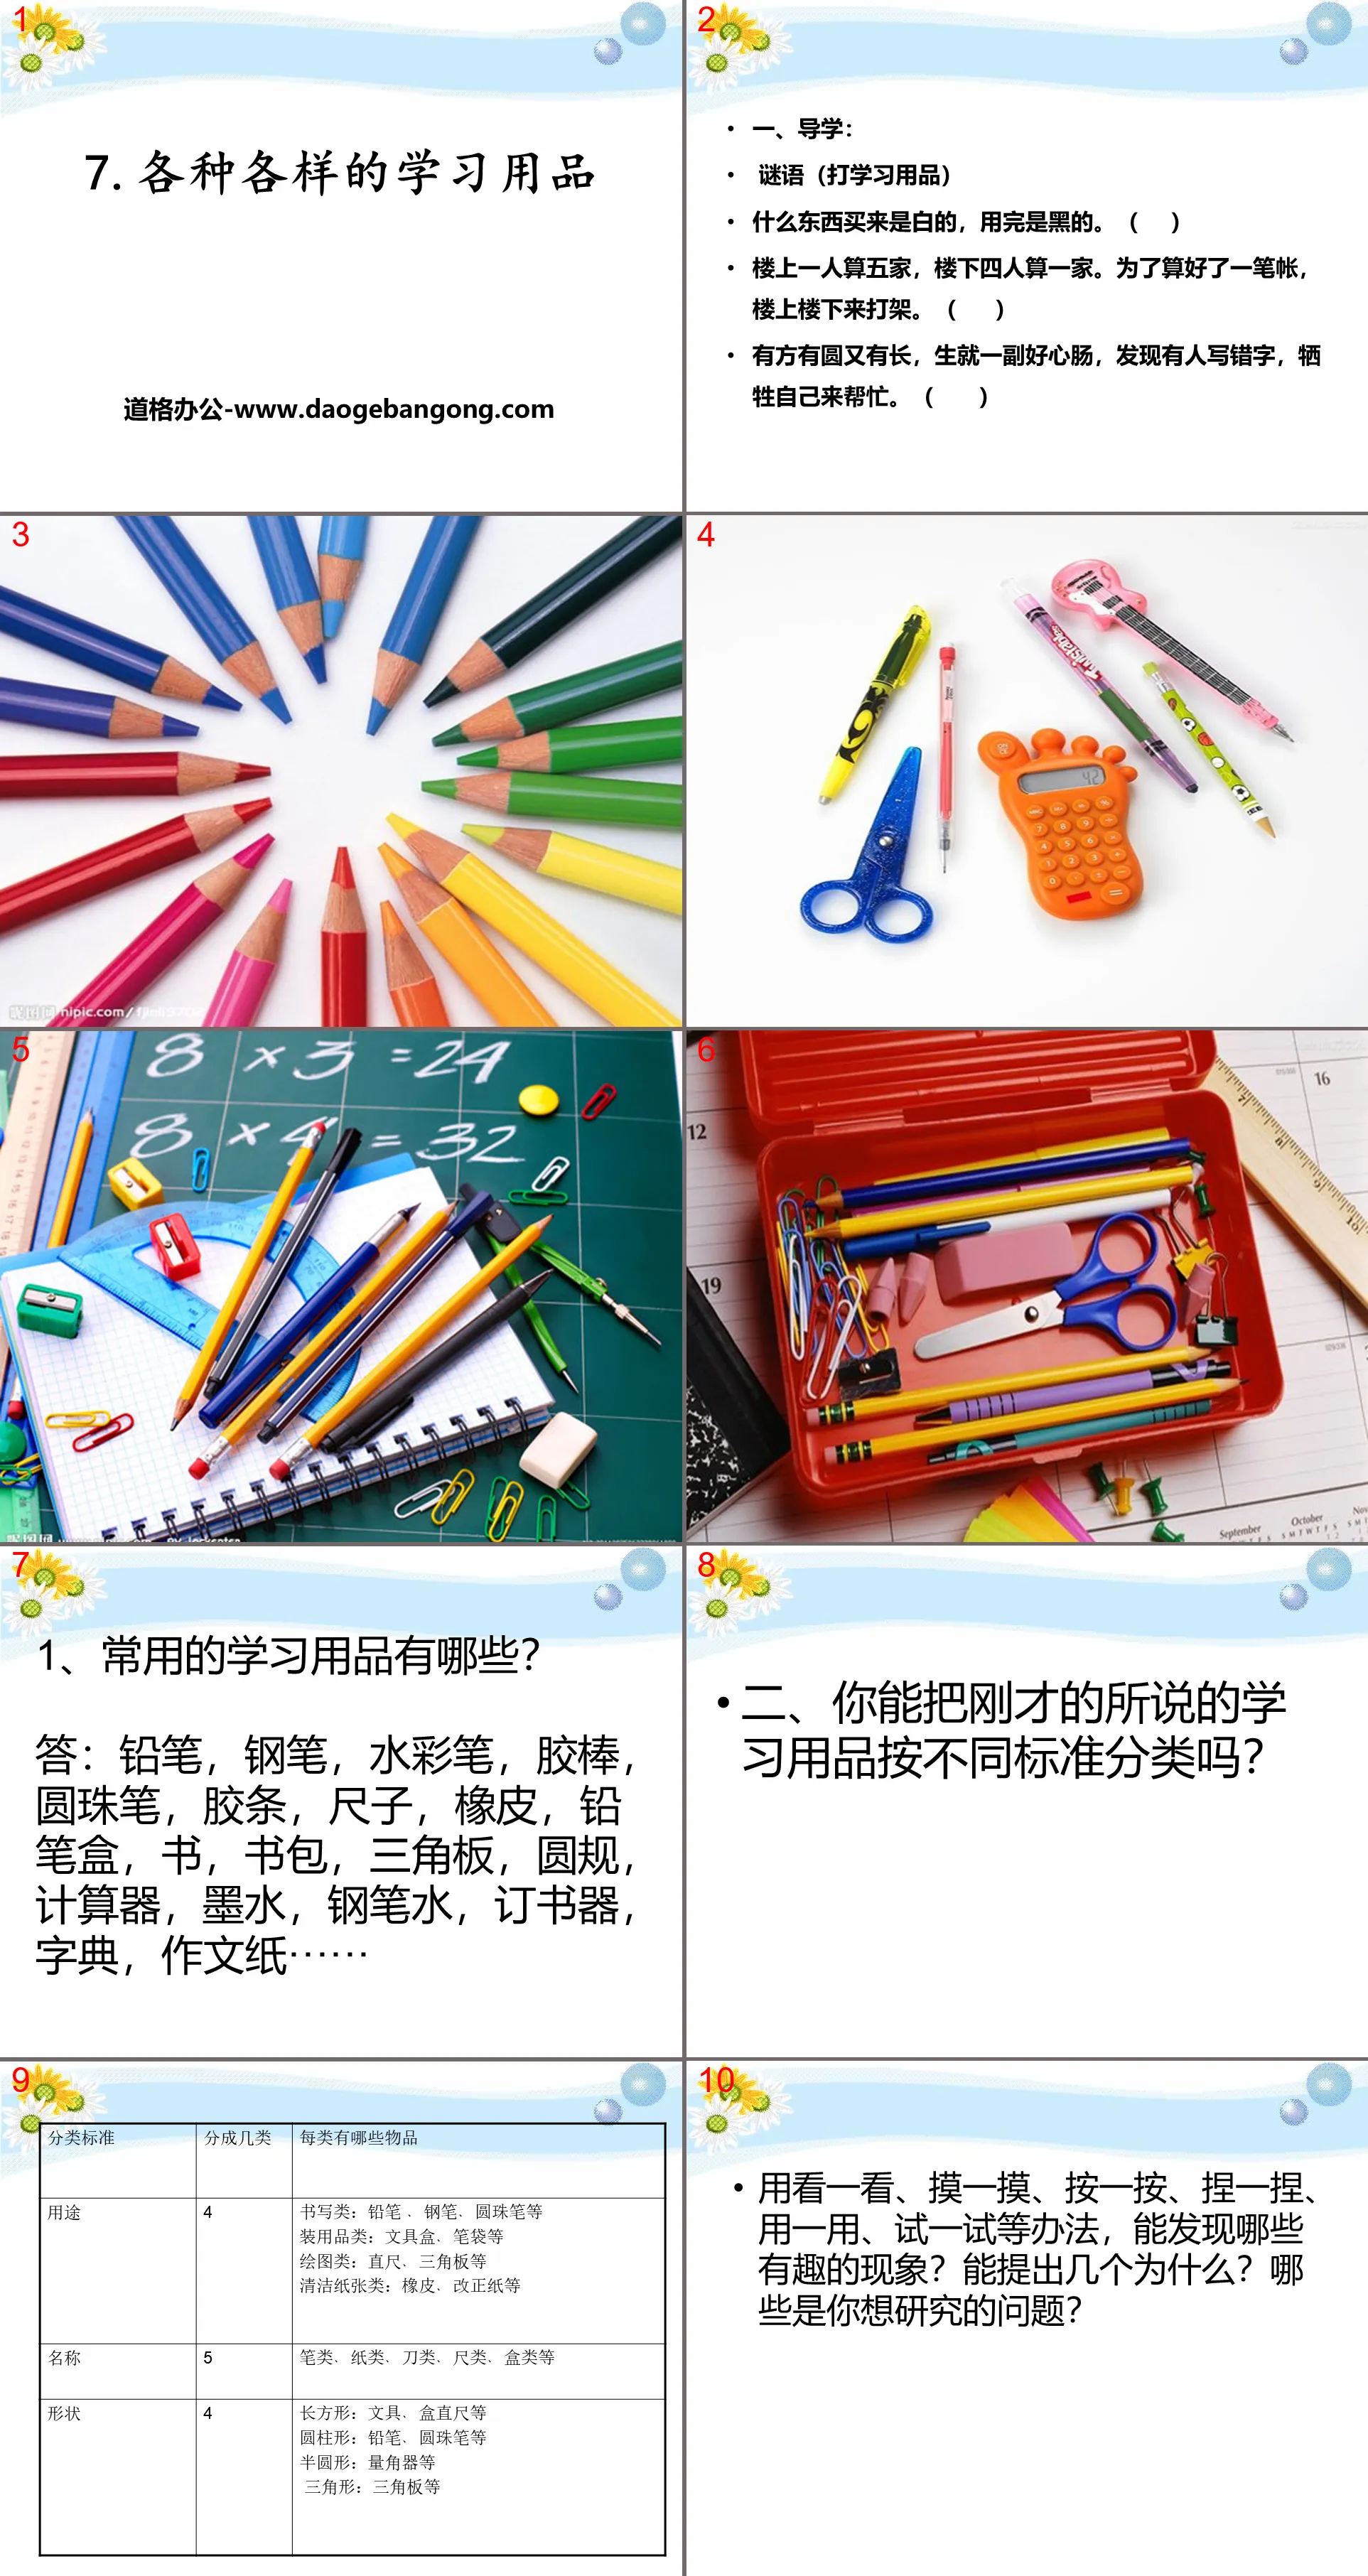 "Various School Supplies" PPT Courseware 2